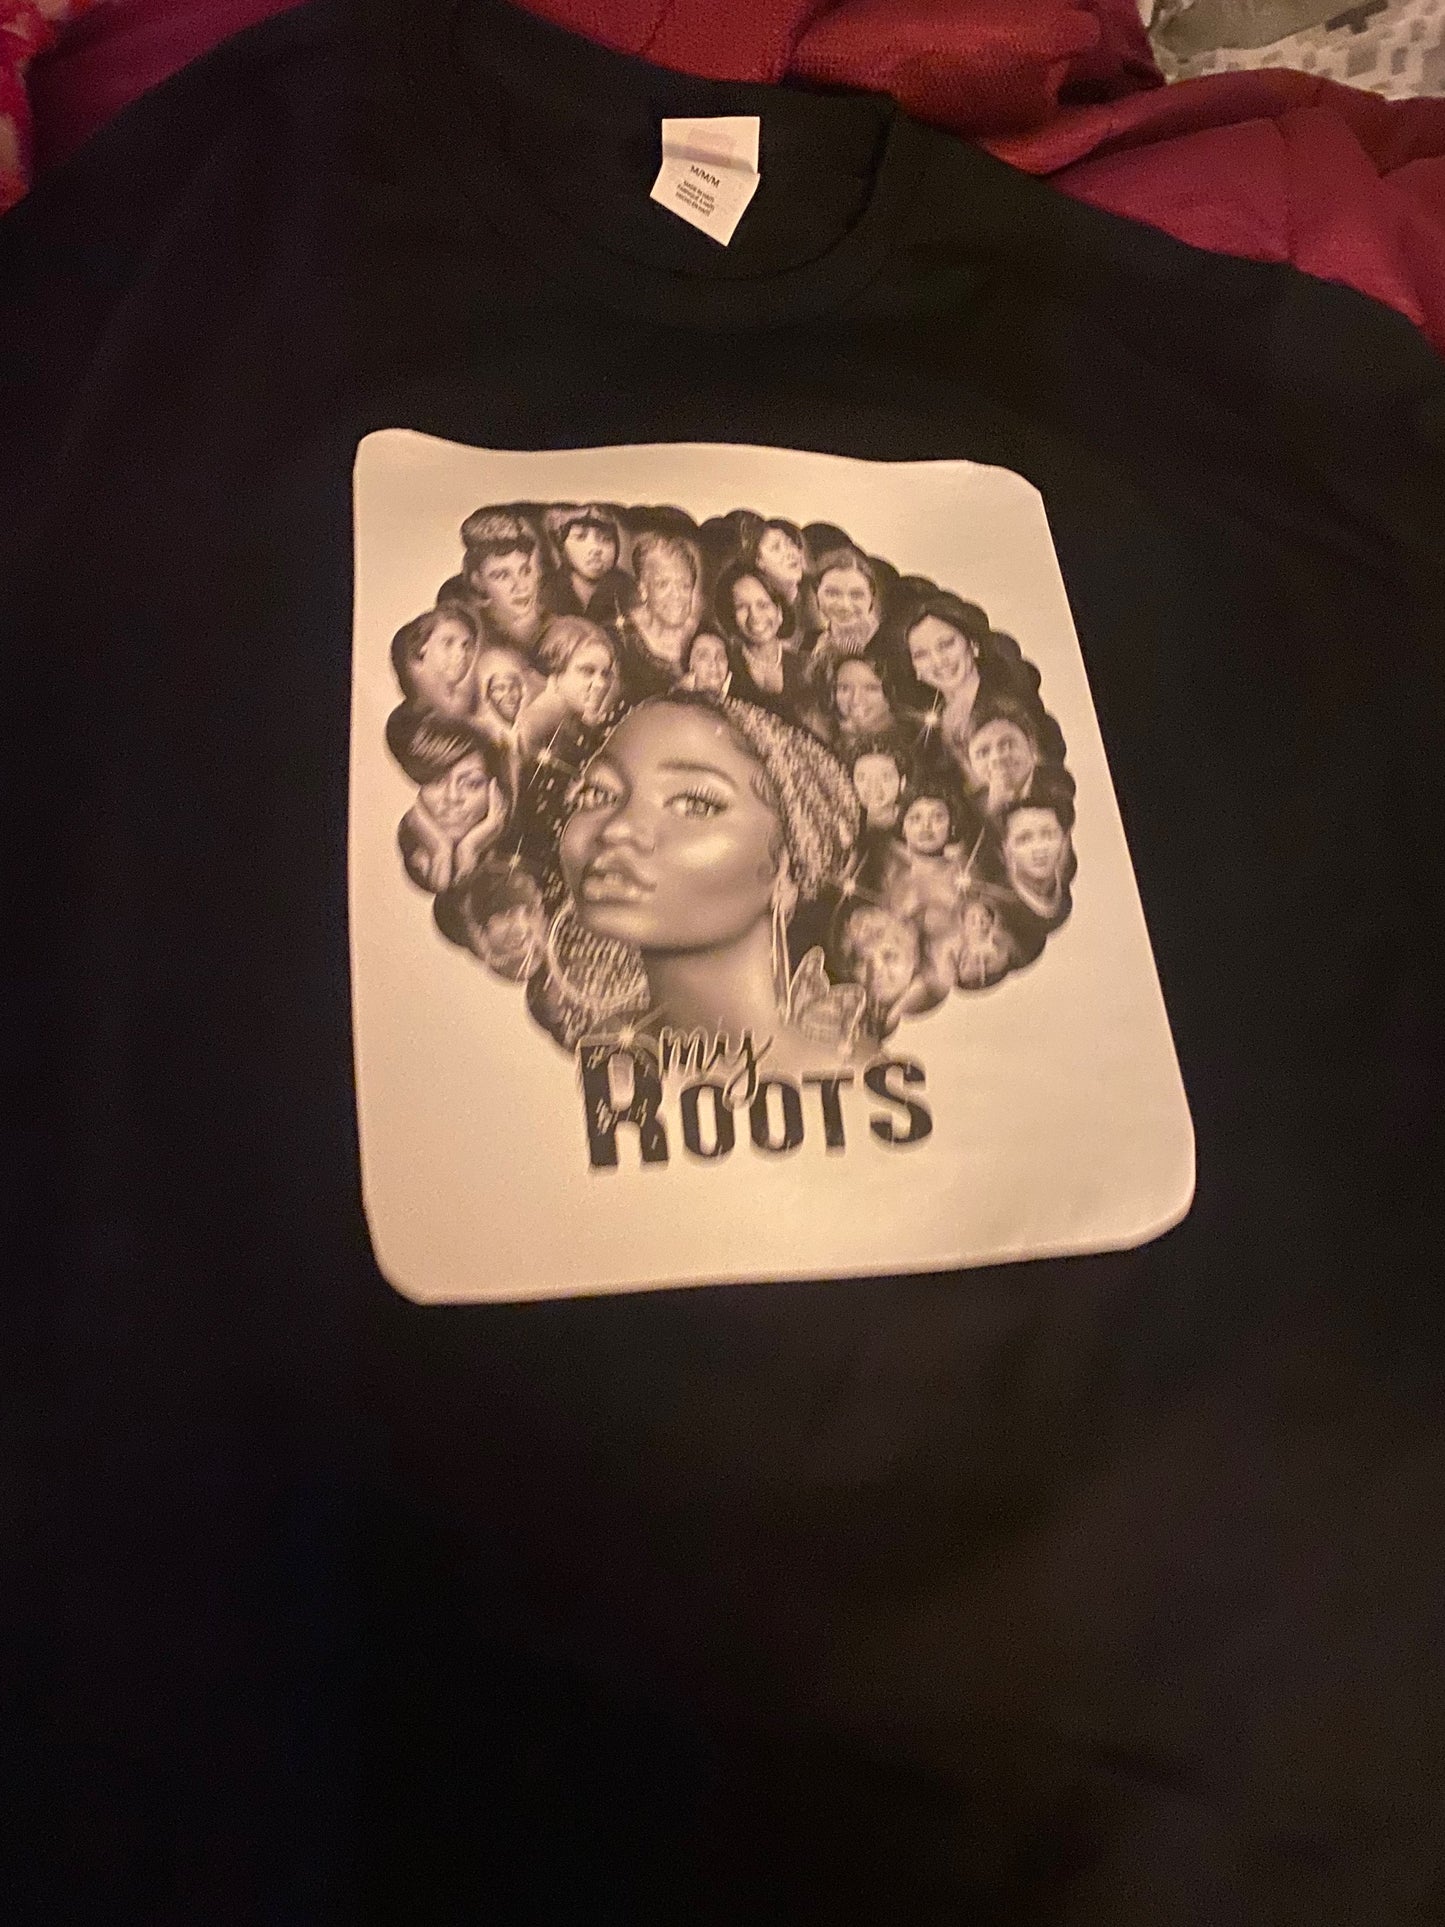 My Roots T-Shirt Ladies T-Shirt